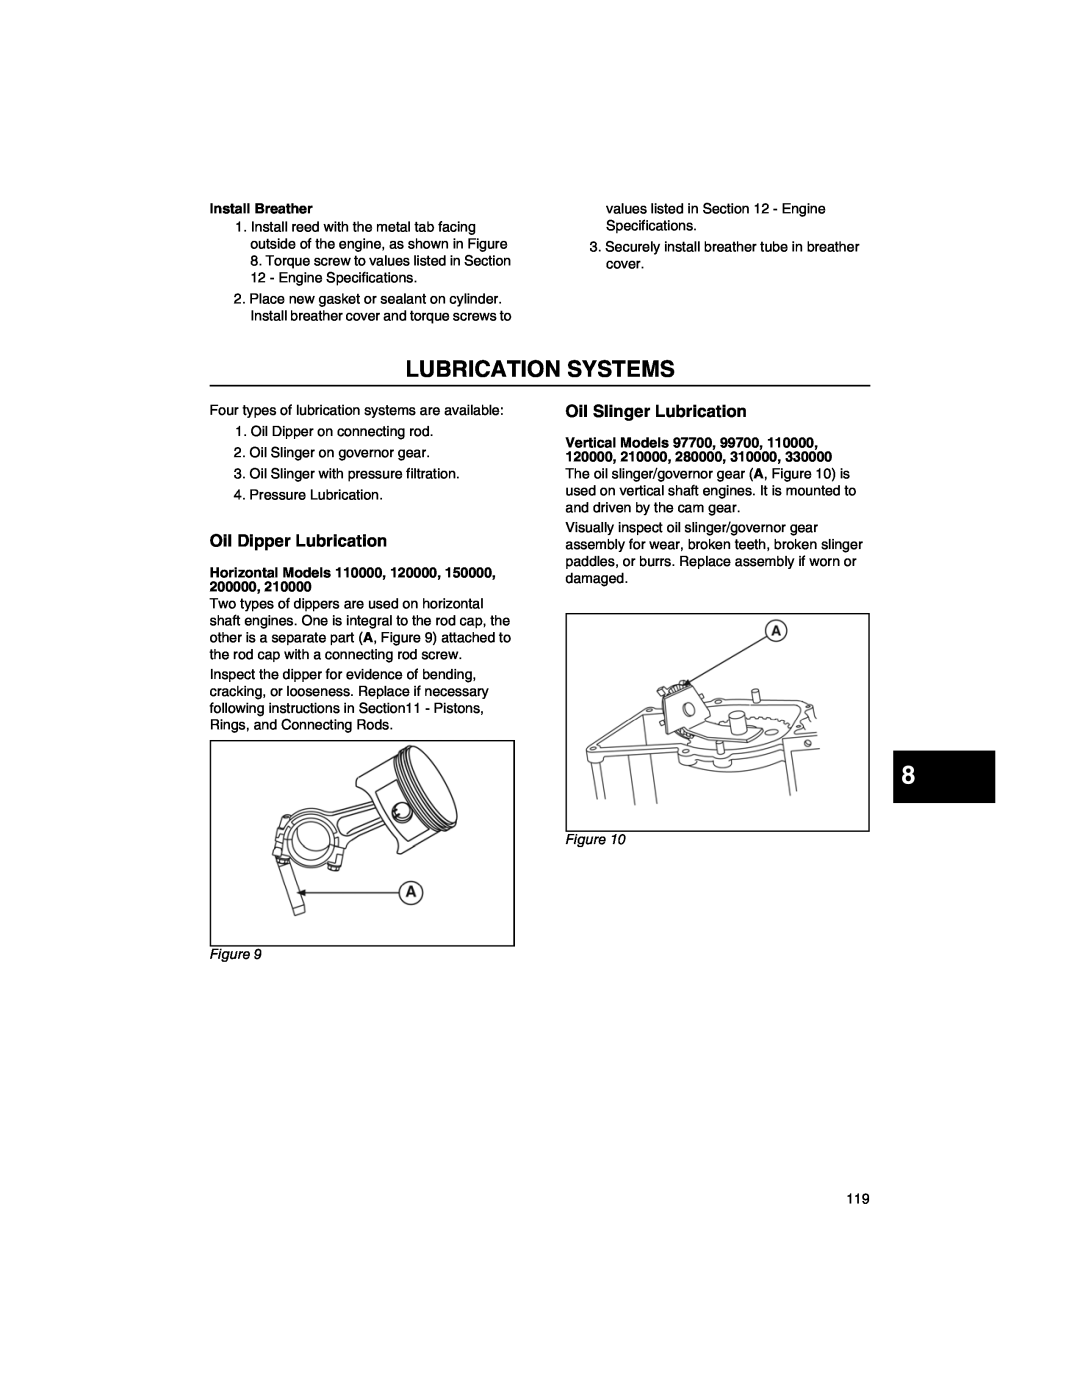 Briggs & Stratton CE8069, 271172 Lubrication Systems, Oil Dipper Lubrication, Oil Slinger Lubrication, Install Breather 